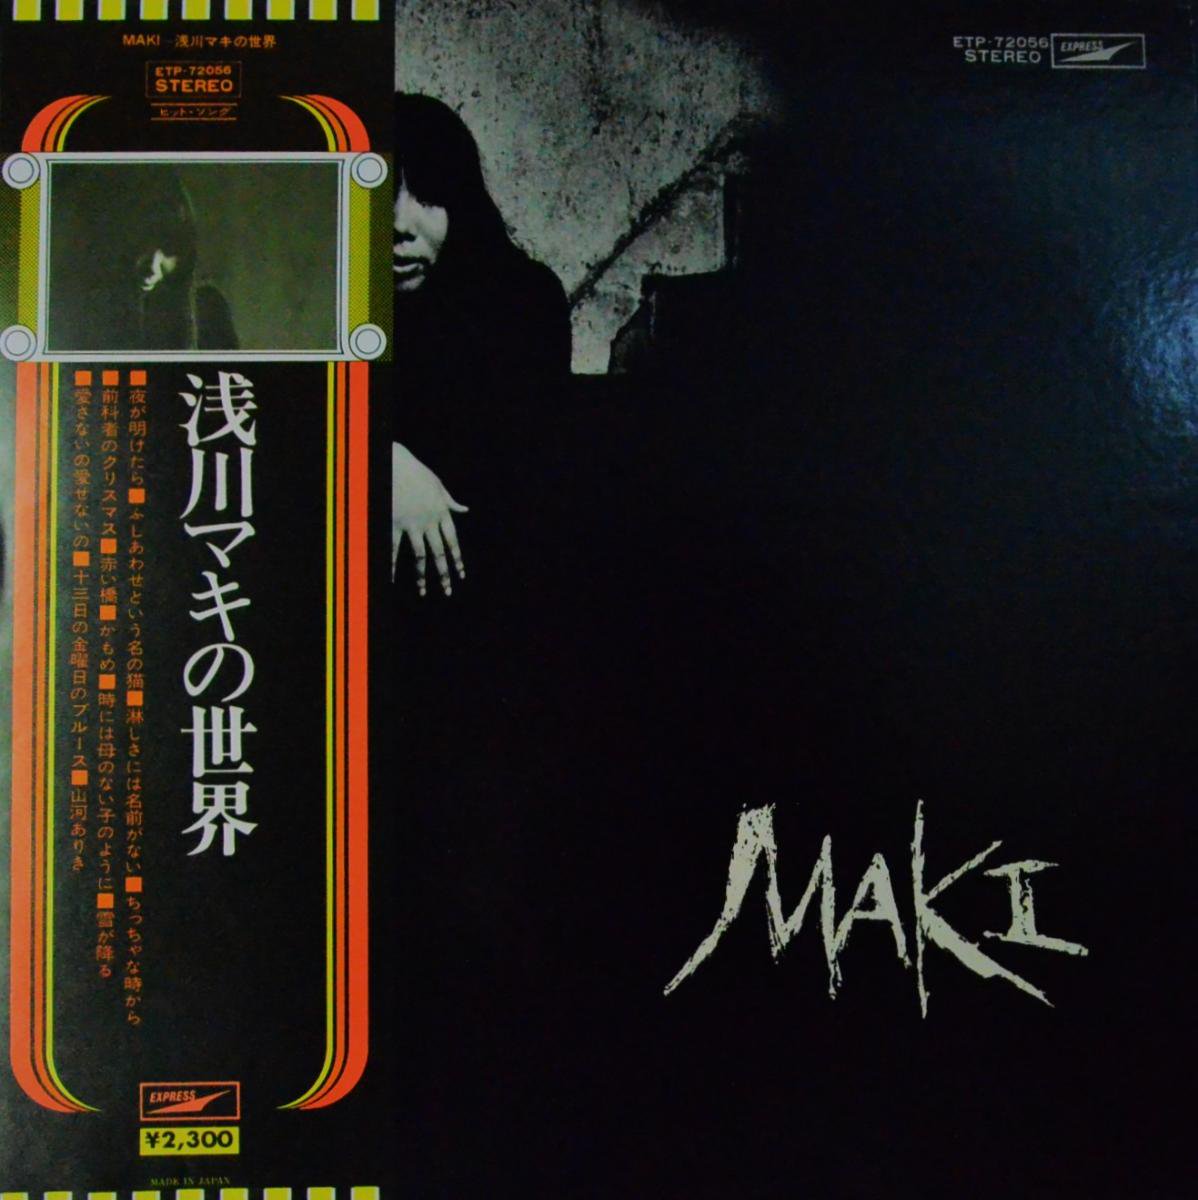 JAPANESE GROOVE / 和モノ - RARE GROOVE / 和レア・グルーヴ - HIP TANK RECORDS